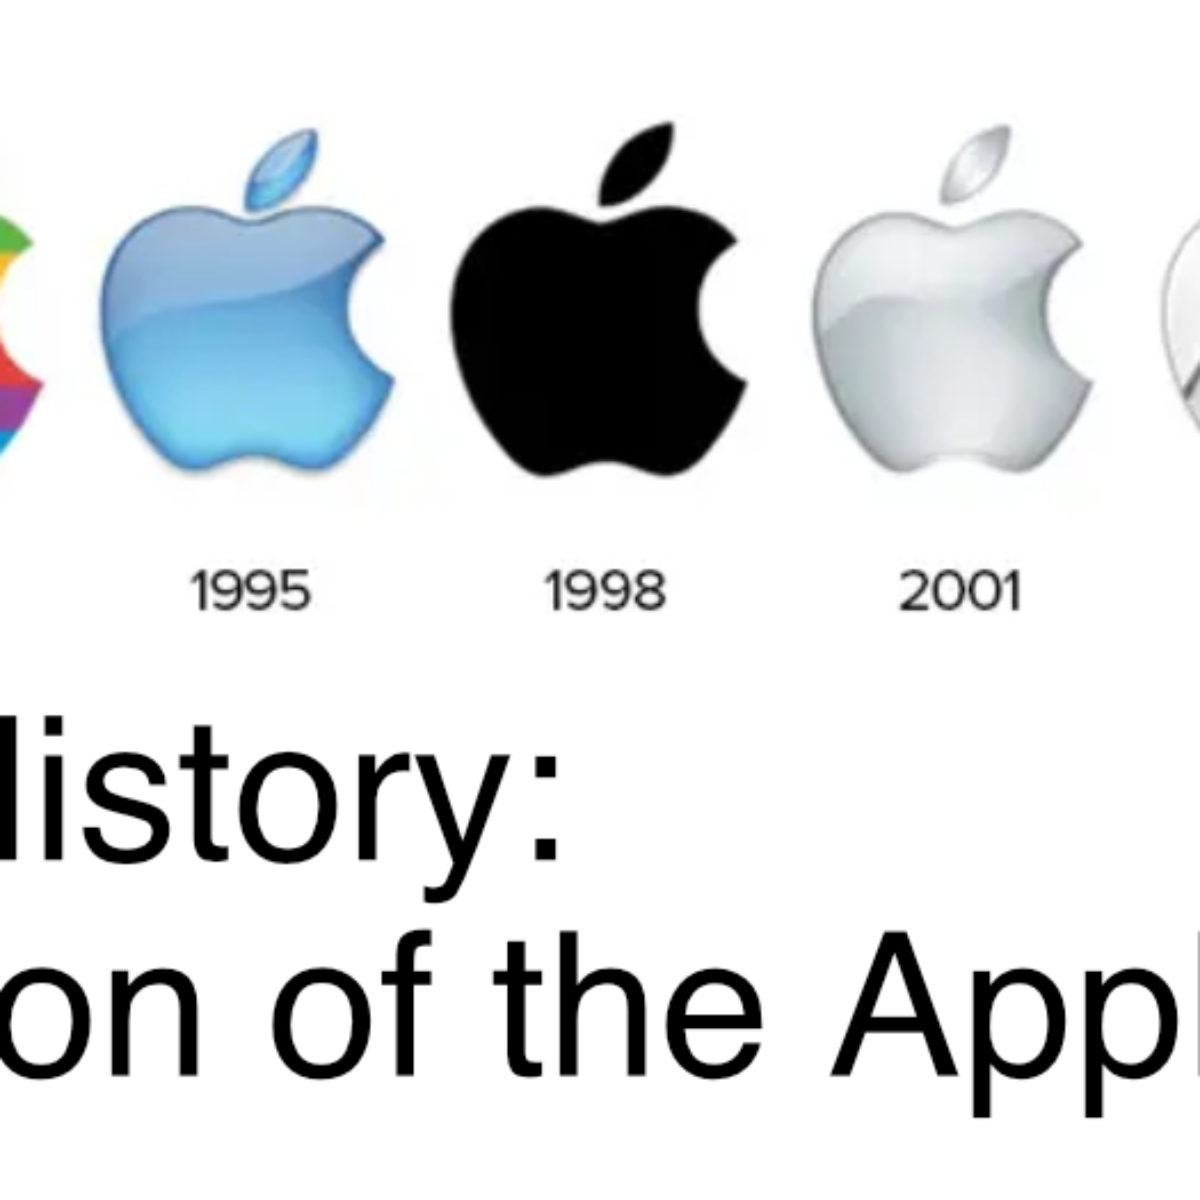 Logo History Evolution Of The Apple Logo 3 Cats Labs Creative